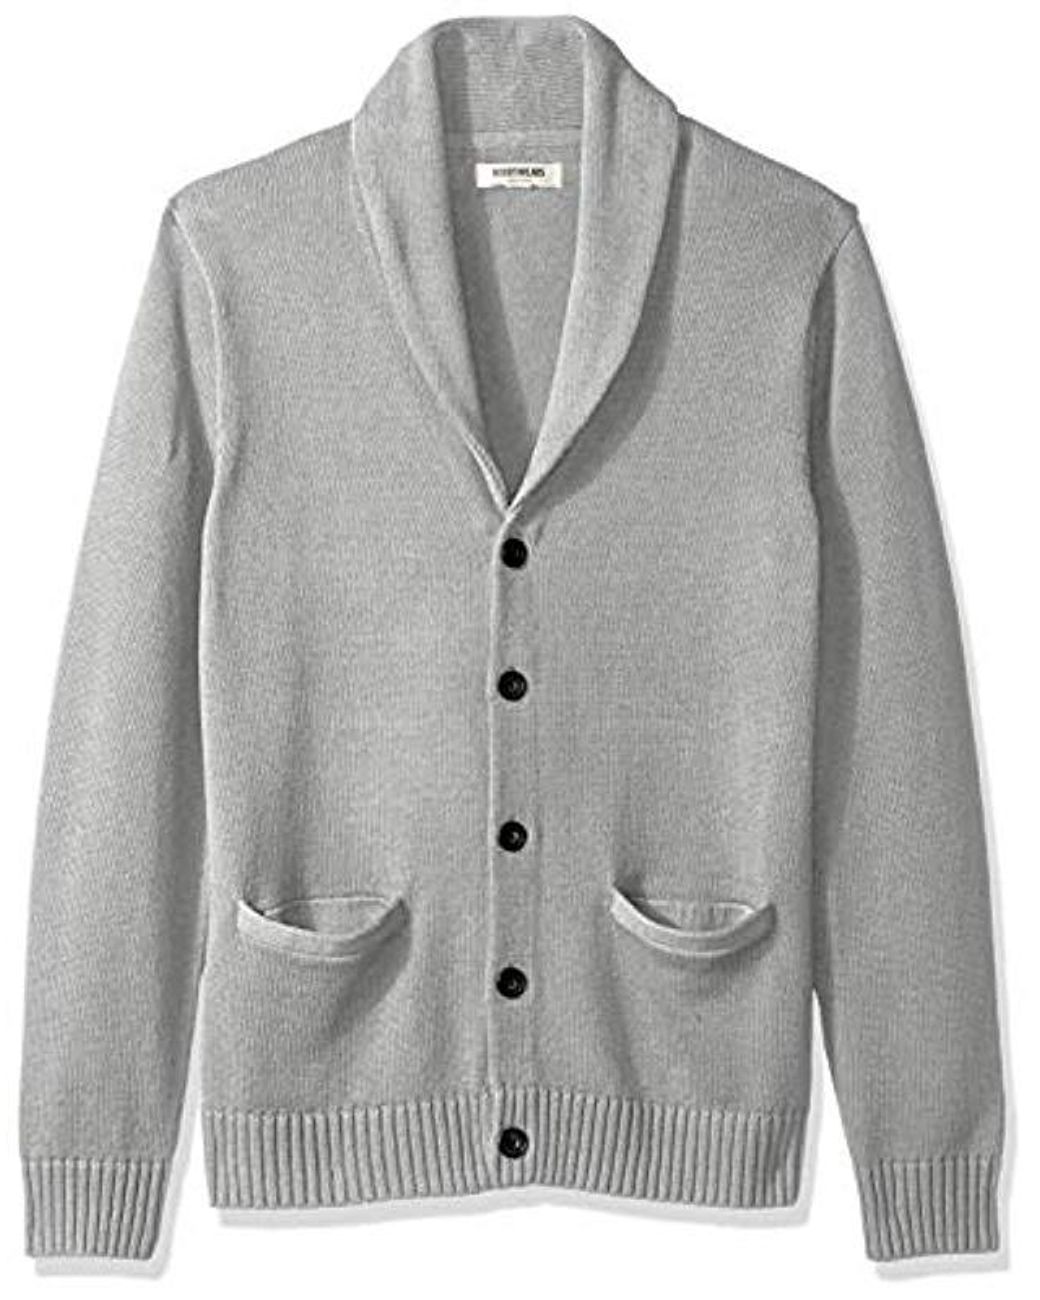 Goodthreads Amazon Brand - Soft Cotton Shawl Cardigan Sweater in ...